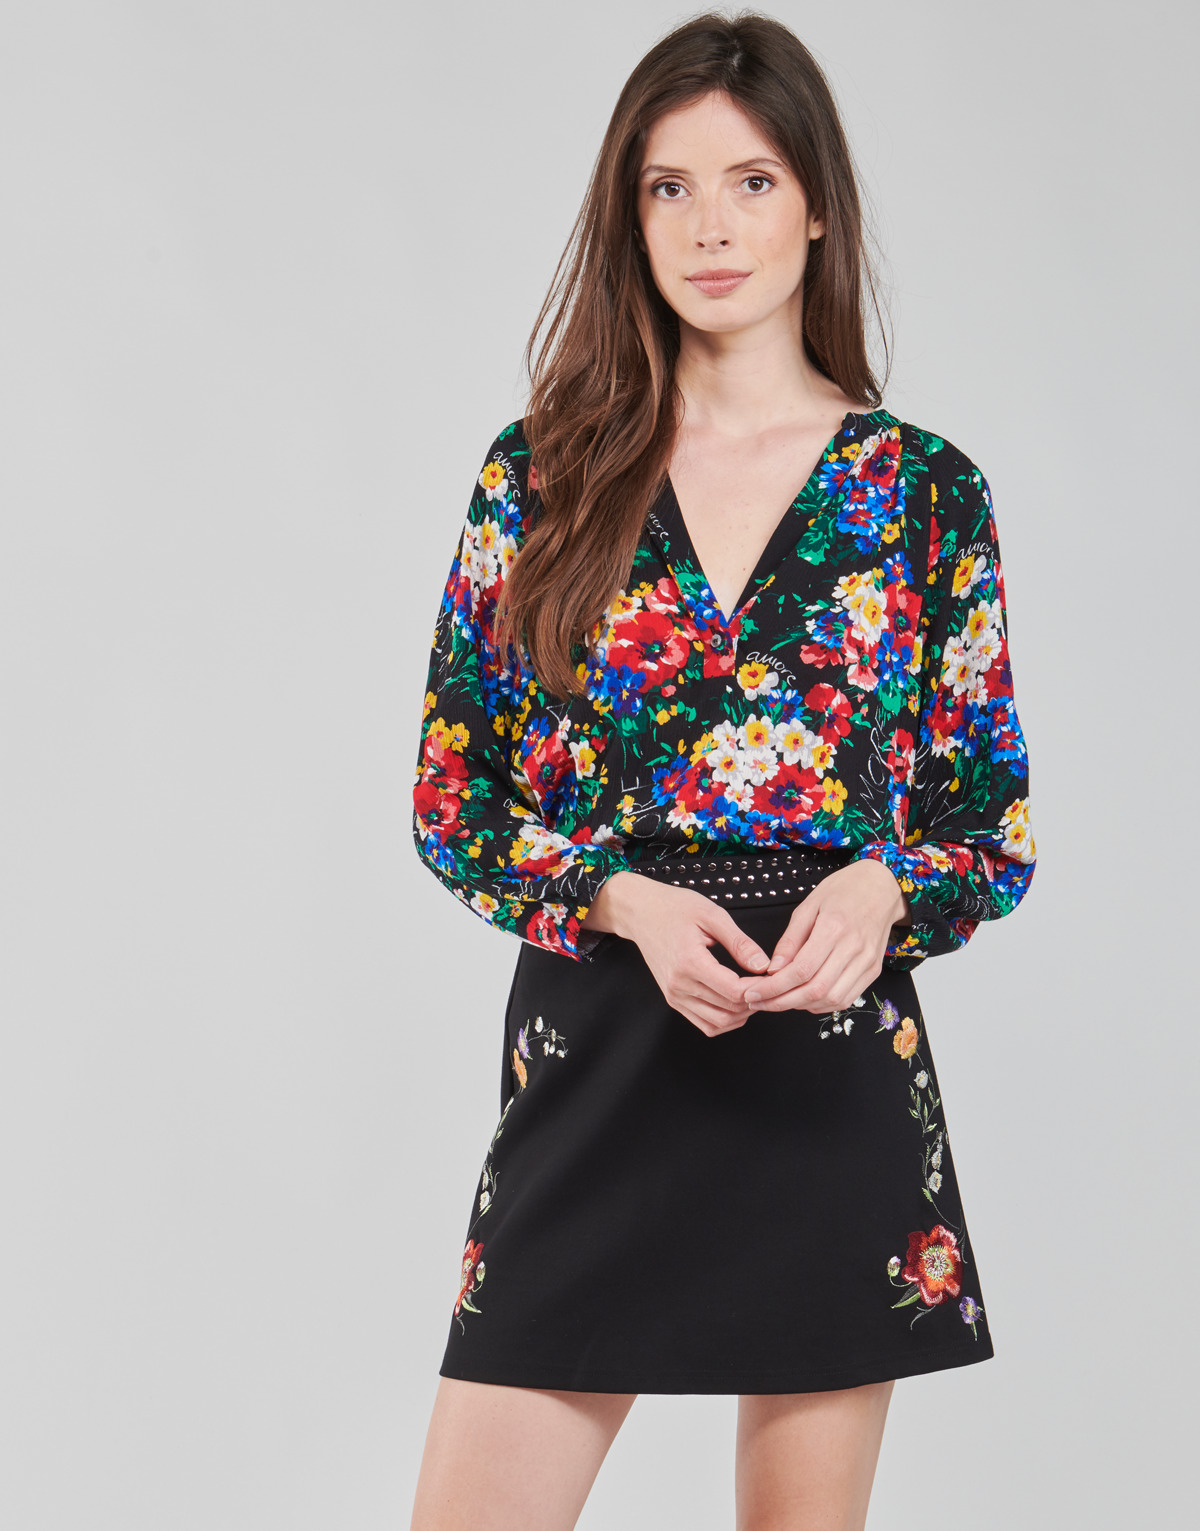 Textil Mulher Tops / Blusas Desigual VERBENA Multicolor